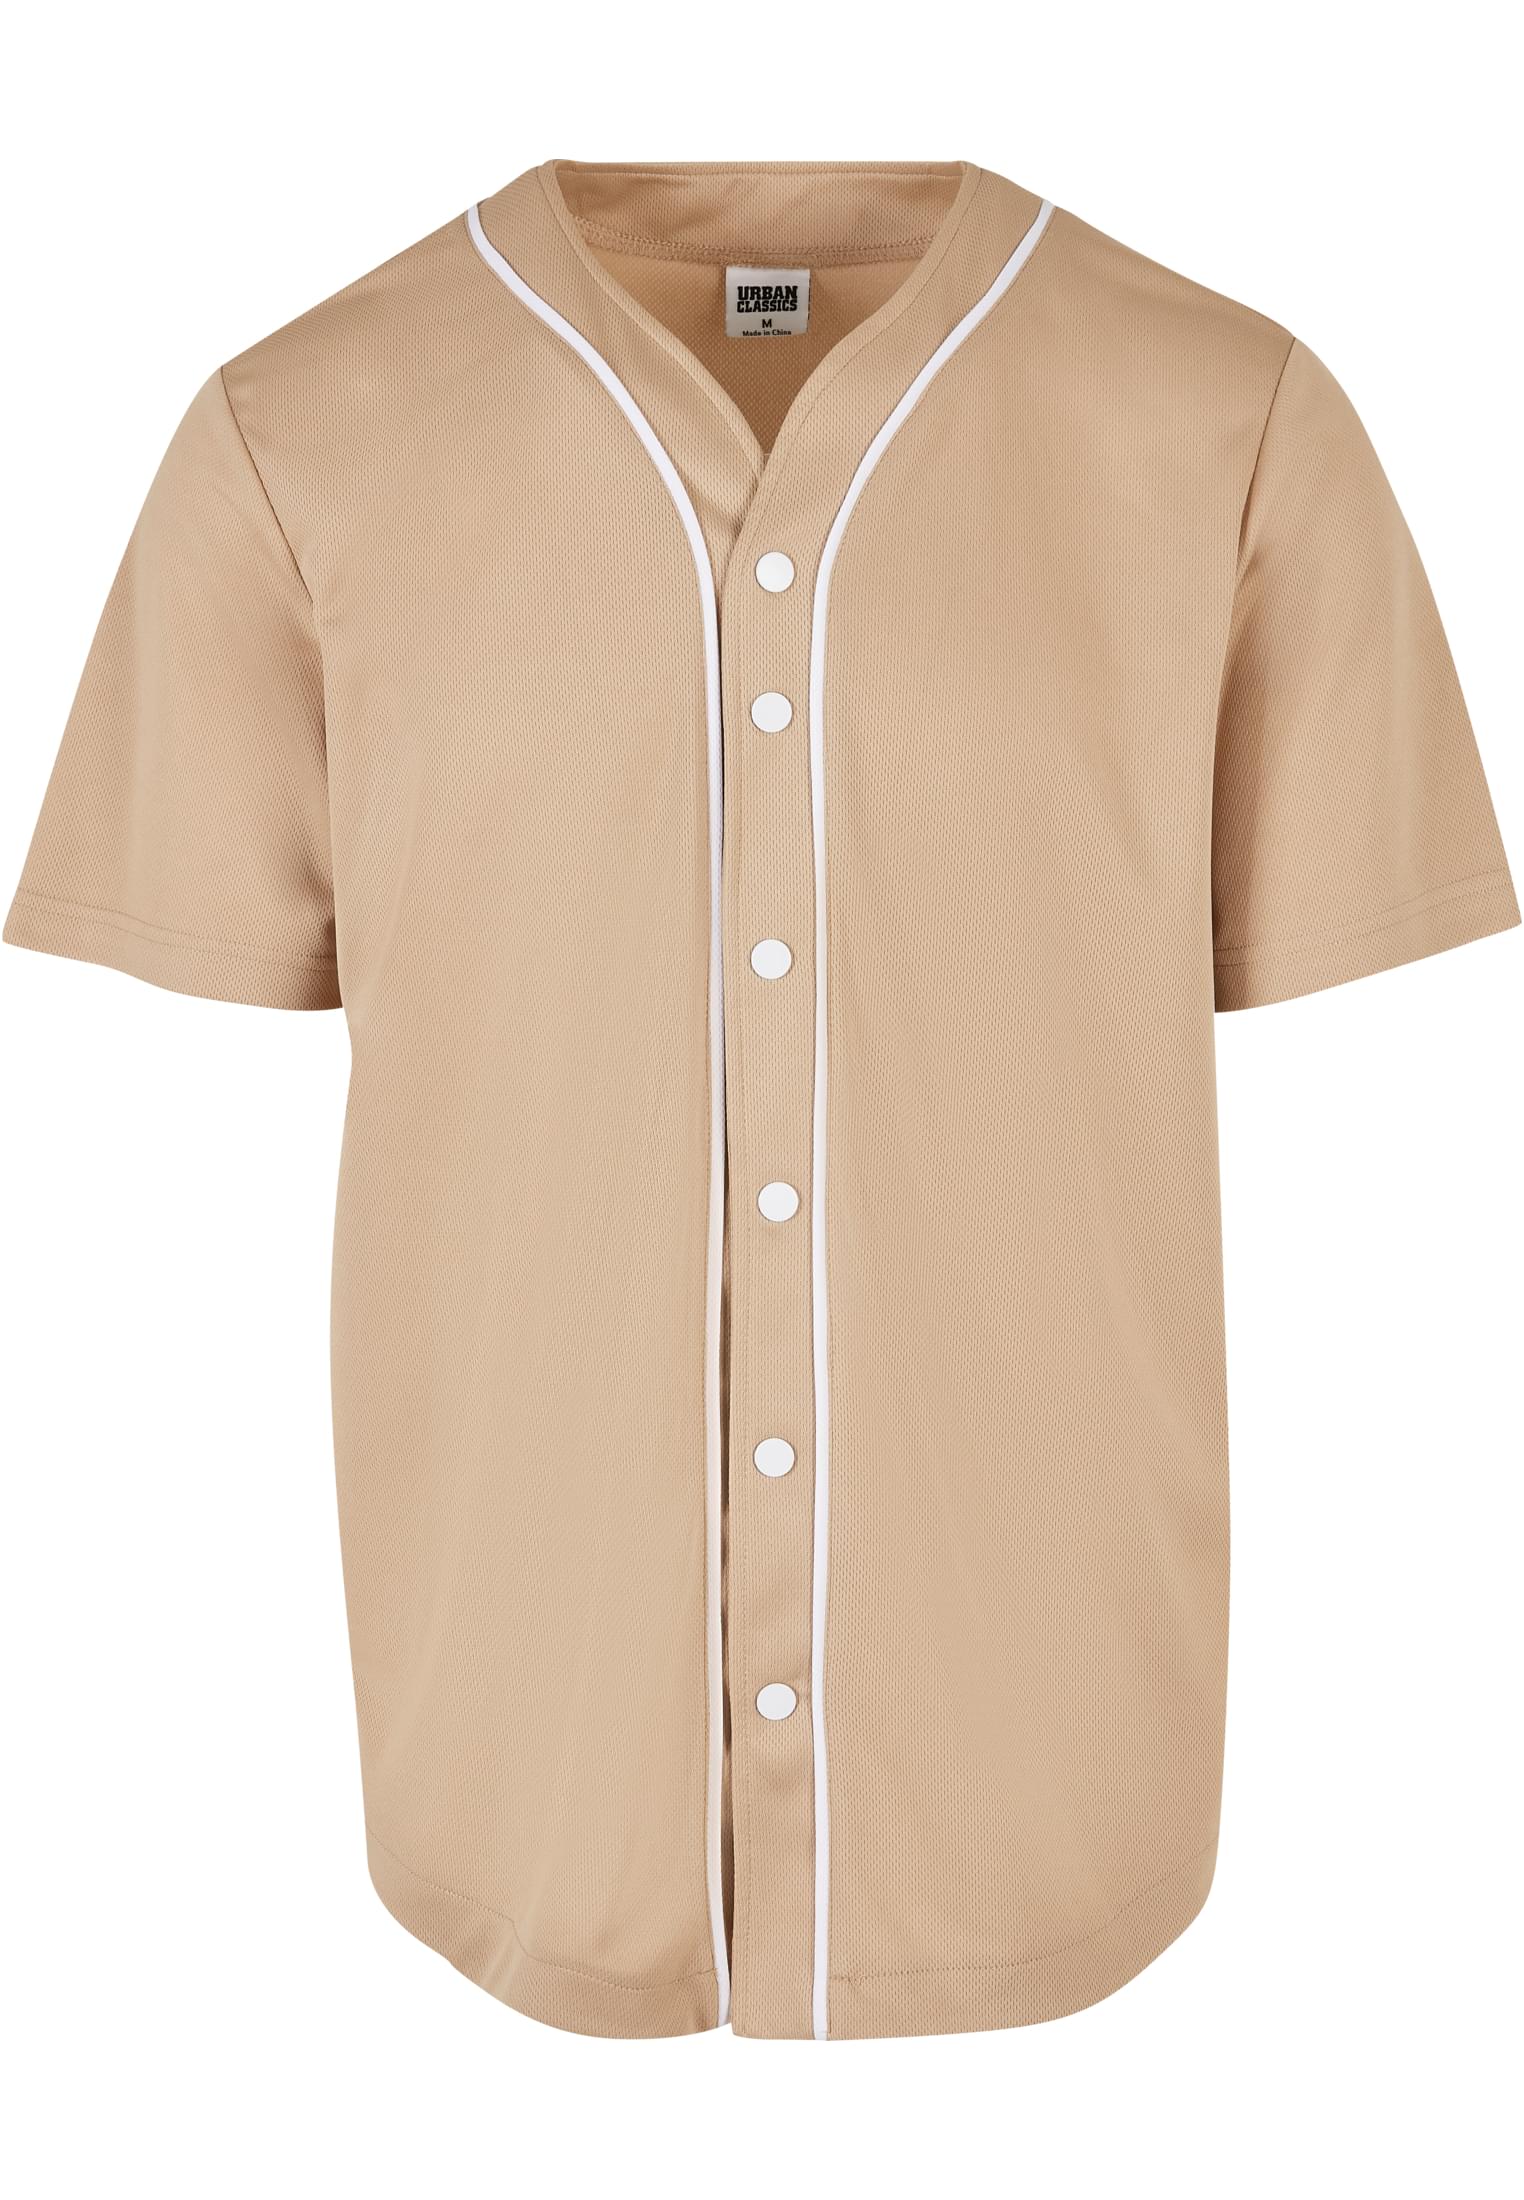 Herren Baseball Mesh Jersey in Farbe unionbeige/white